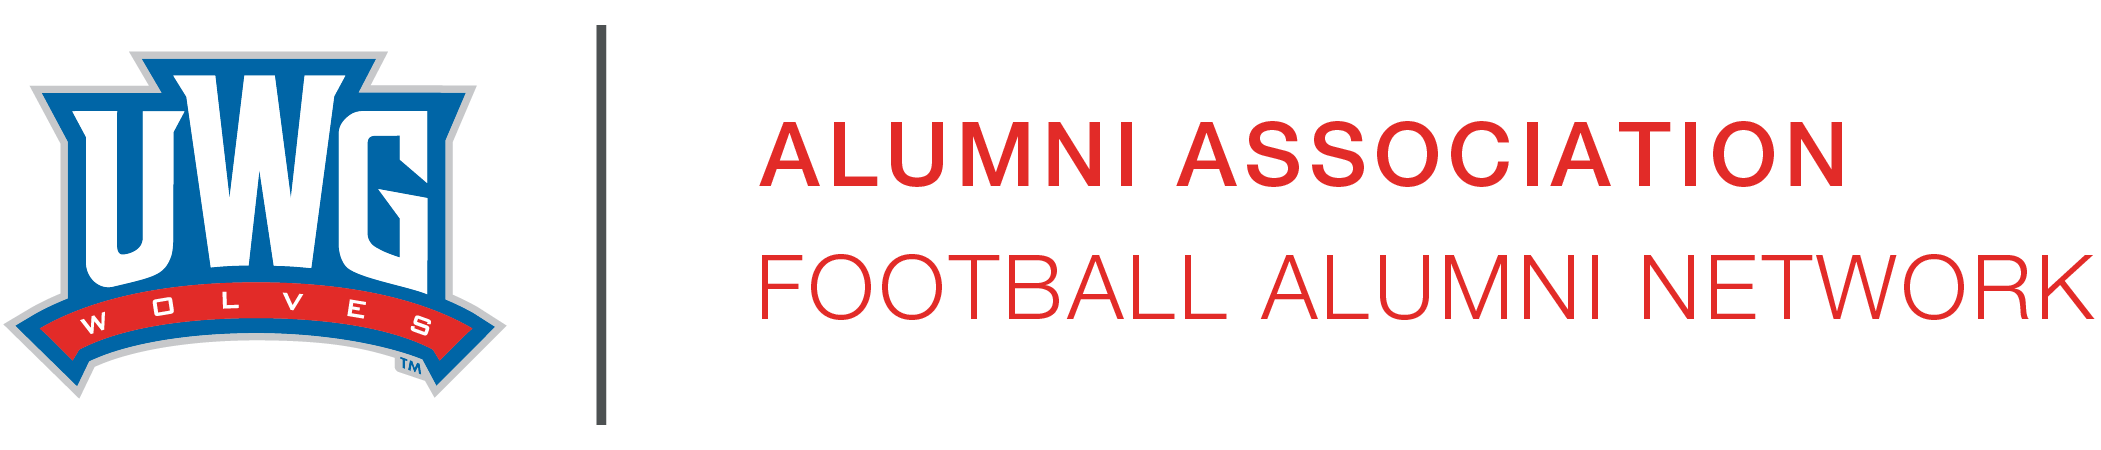 Football Alumni Network